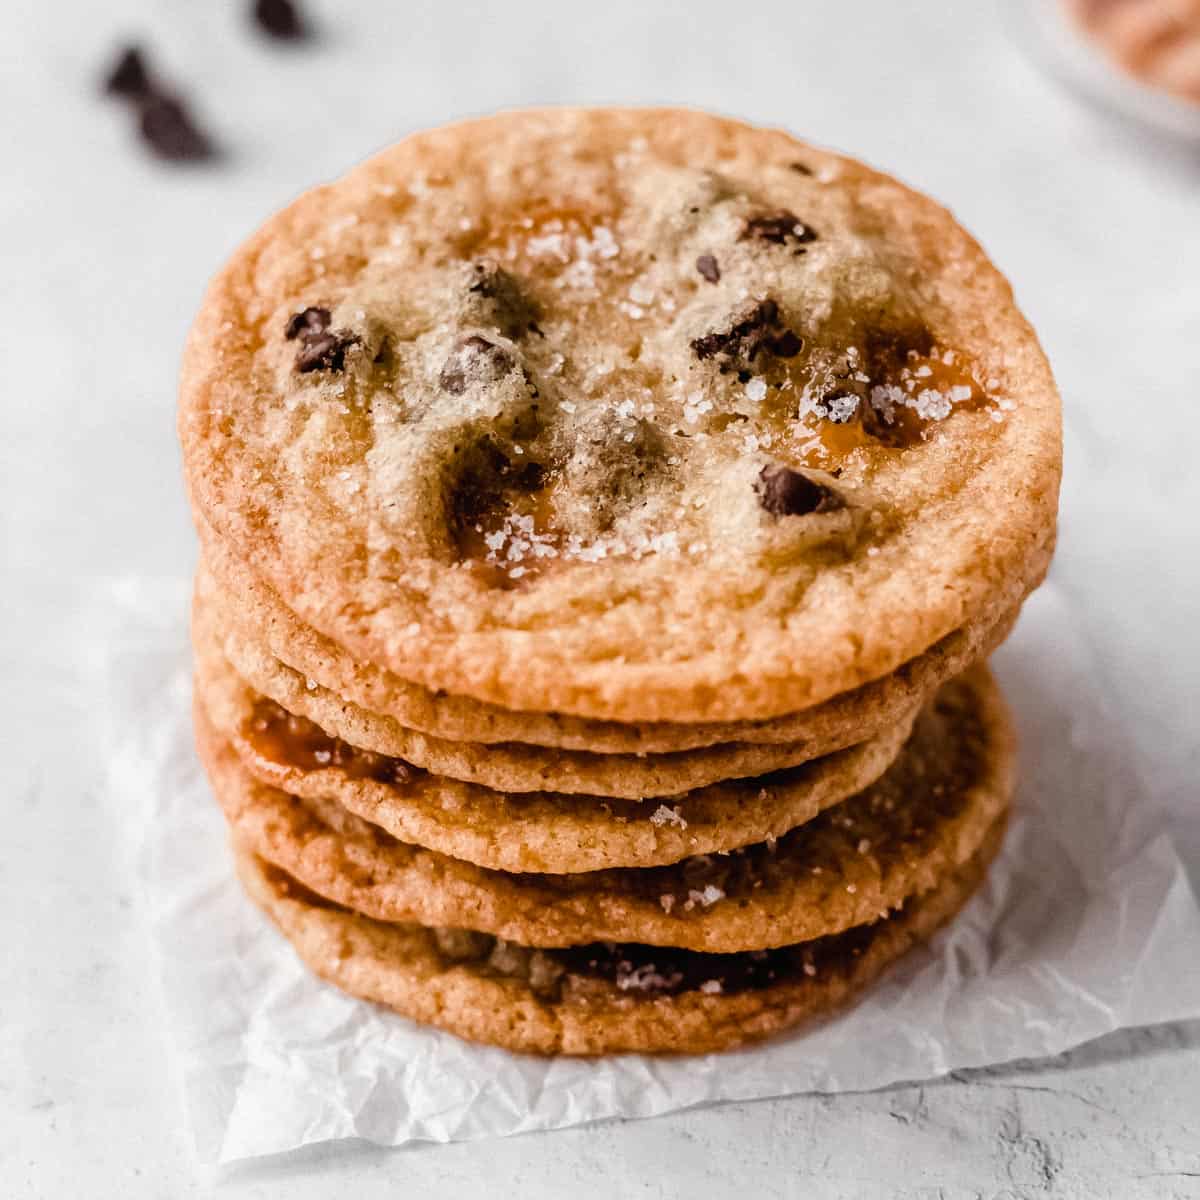 https://deliciouslittlebites.com/wp-content/uploads/2017/12/Salted-Caramel-Chocolate-Chip-Cookies-Recipe-Image-1-3.jpg